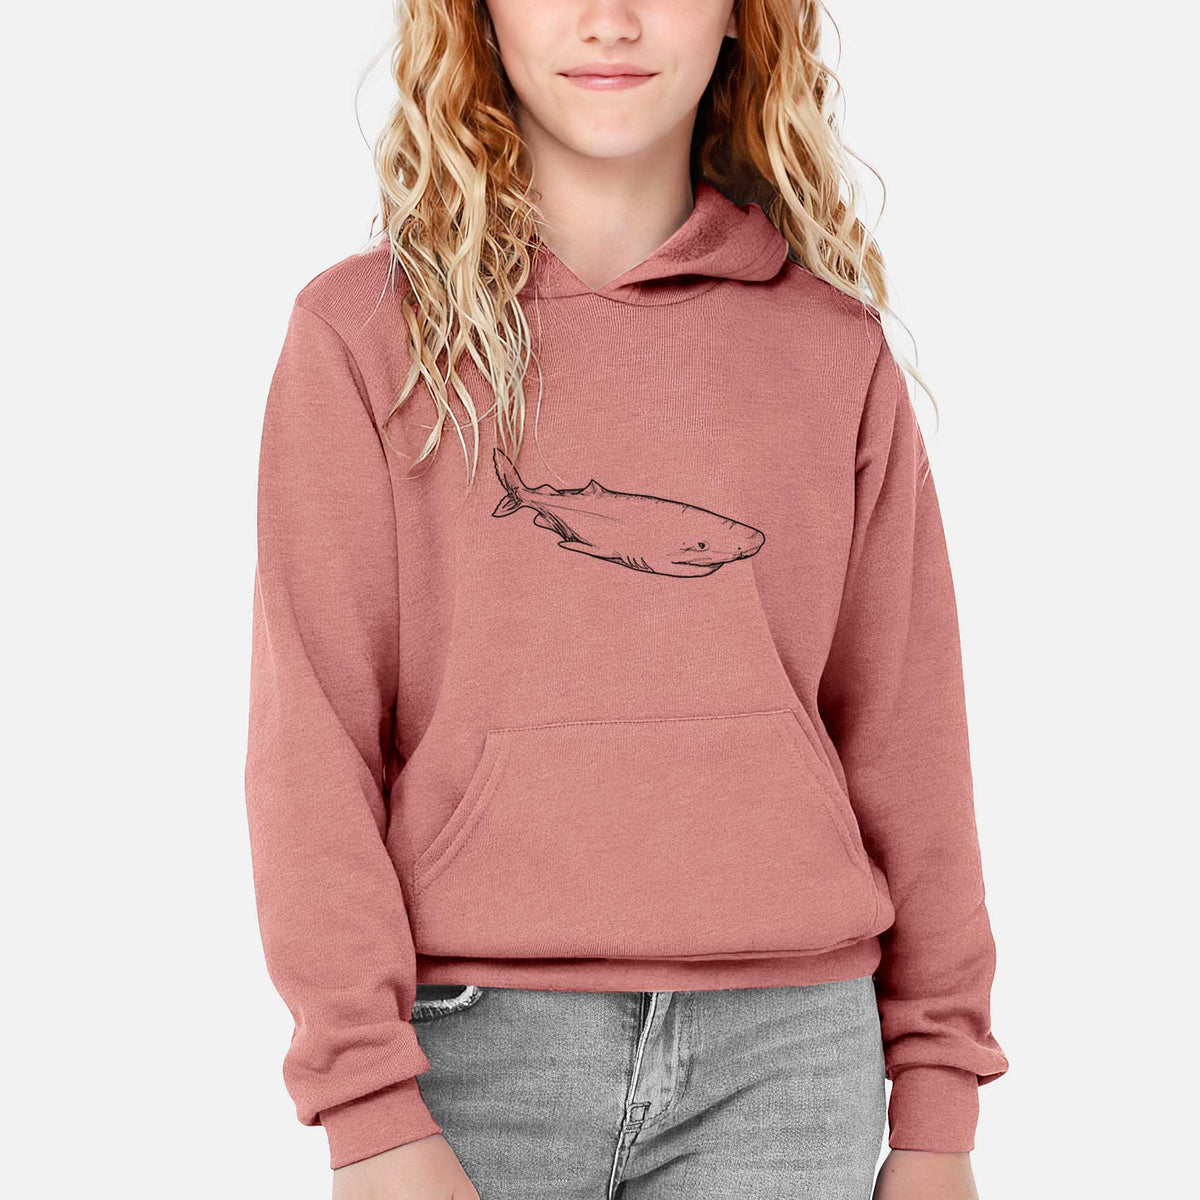 Greenland Shark - Youth Hoodie Sweatshirt